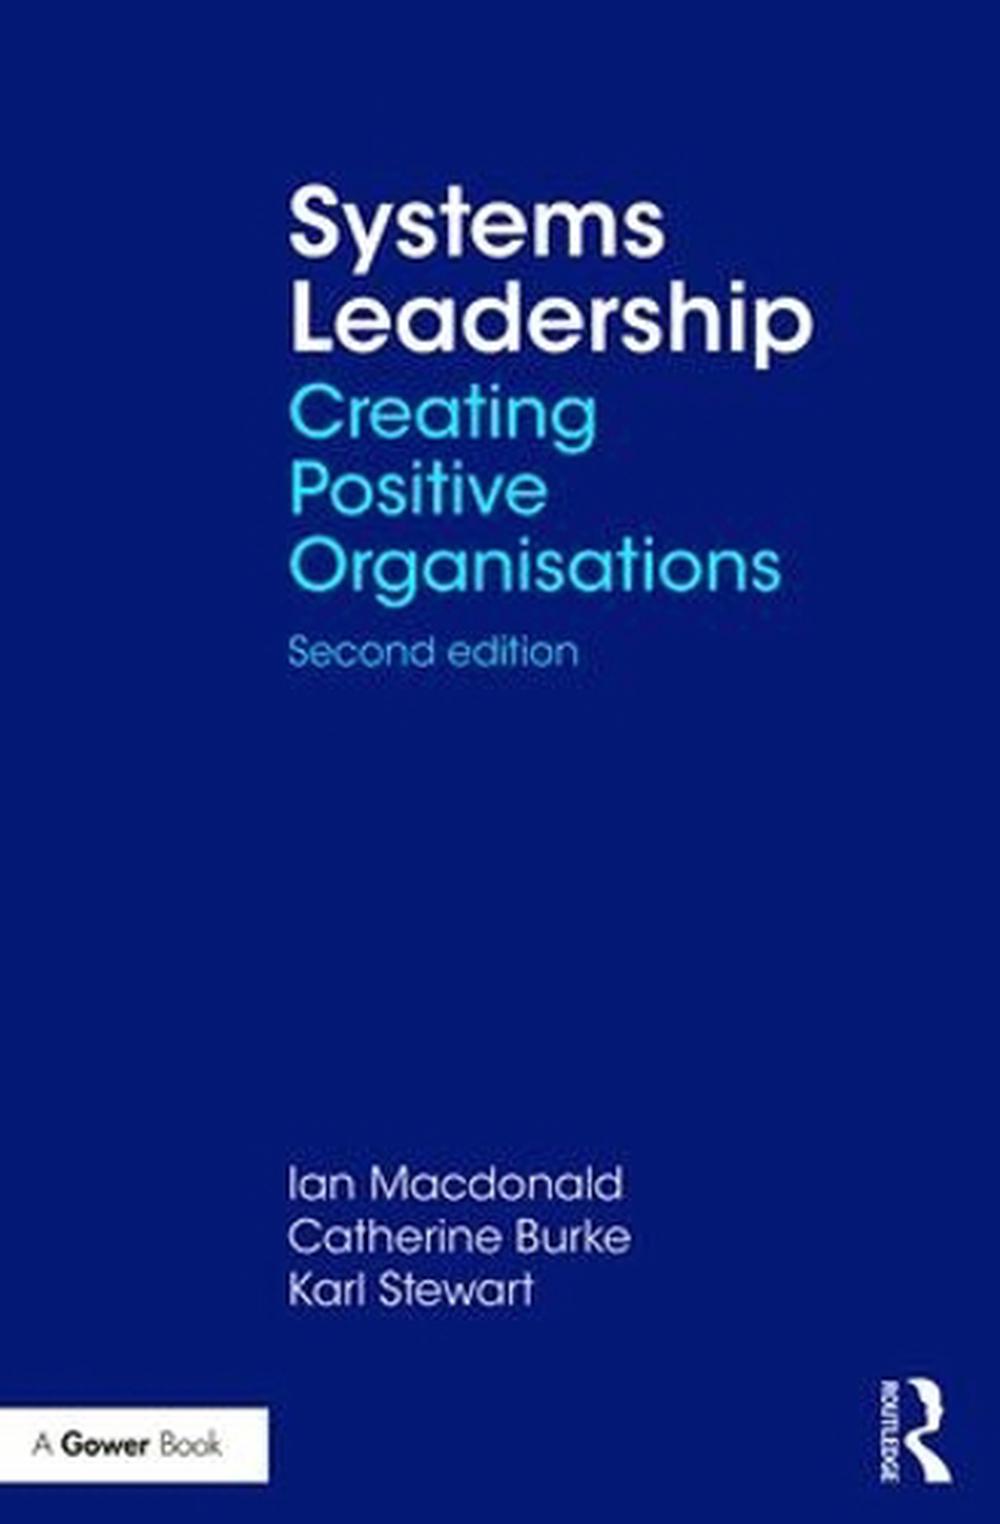 Systems Leadership by Ian Macdonald, Paperback, 9781138036574 | Buy ...